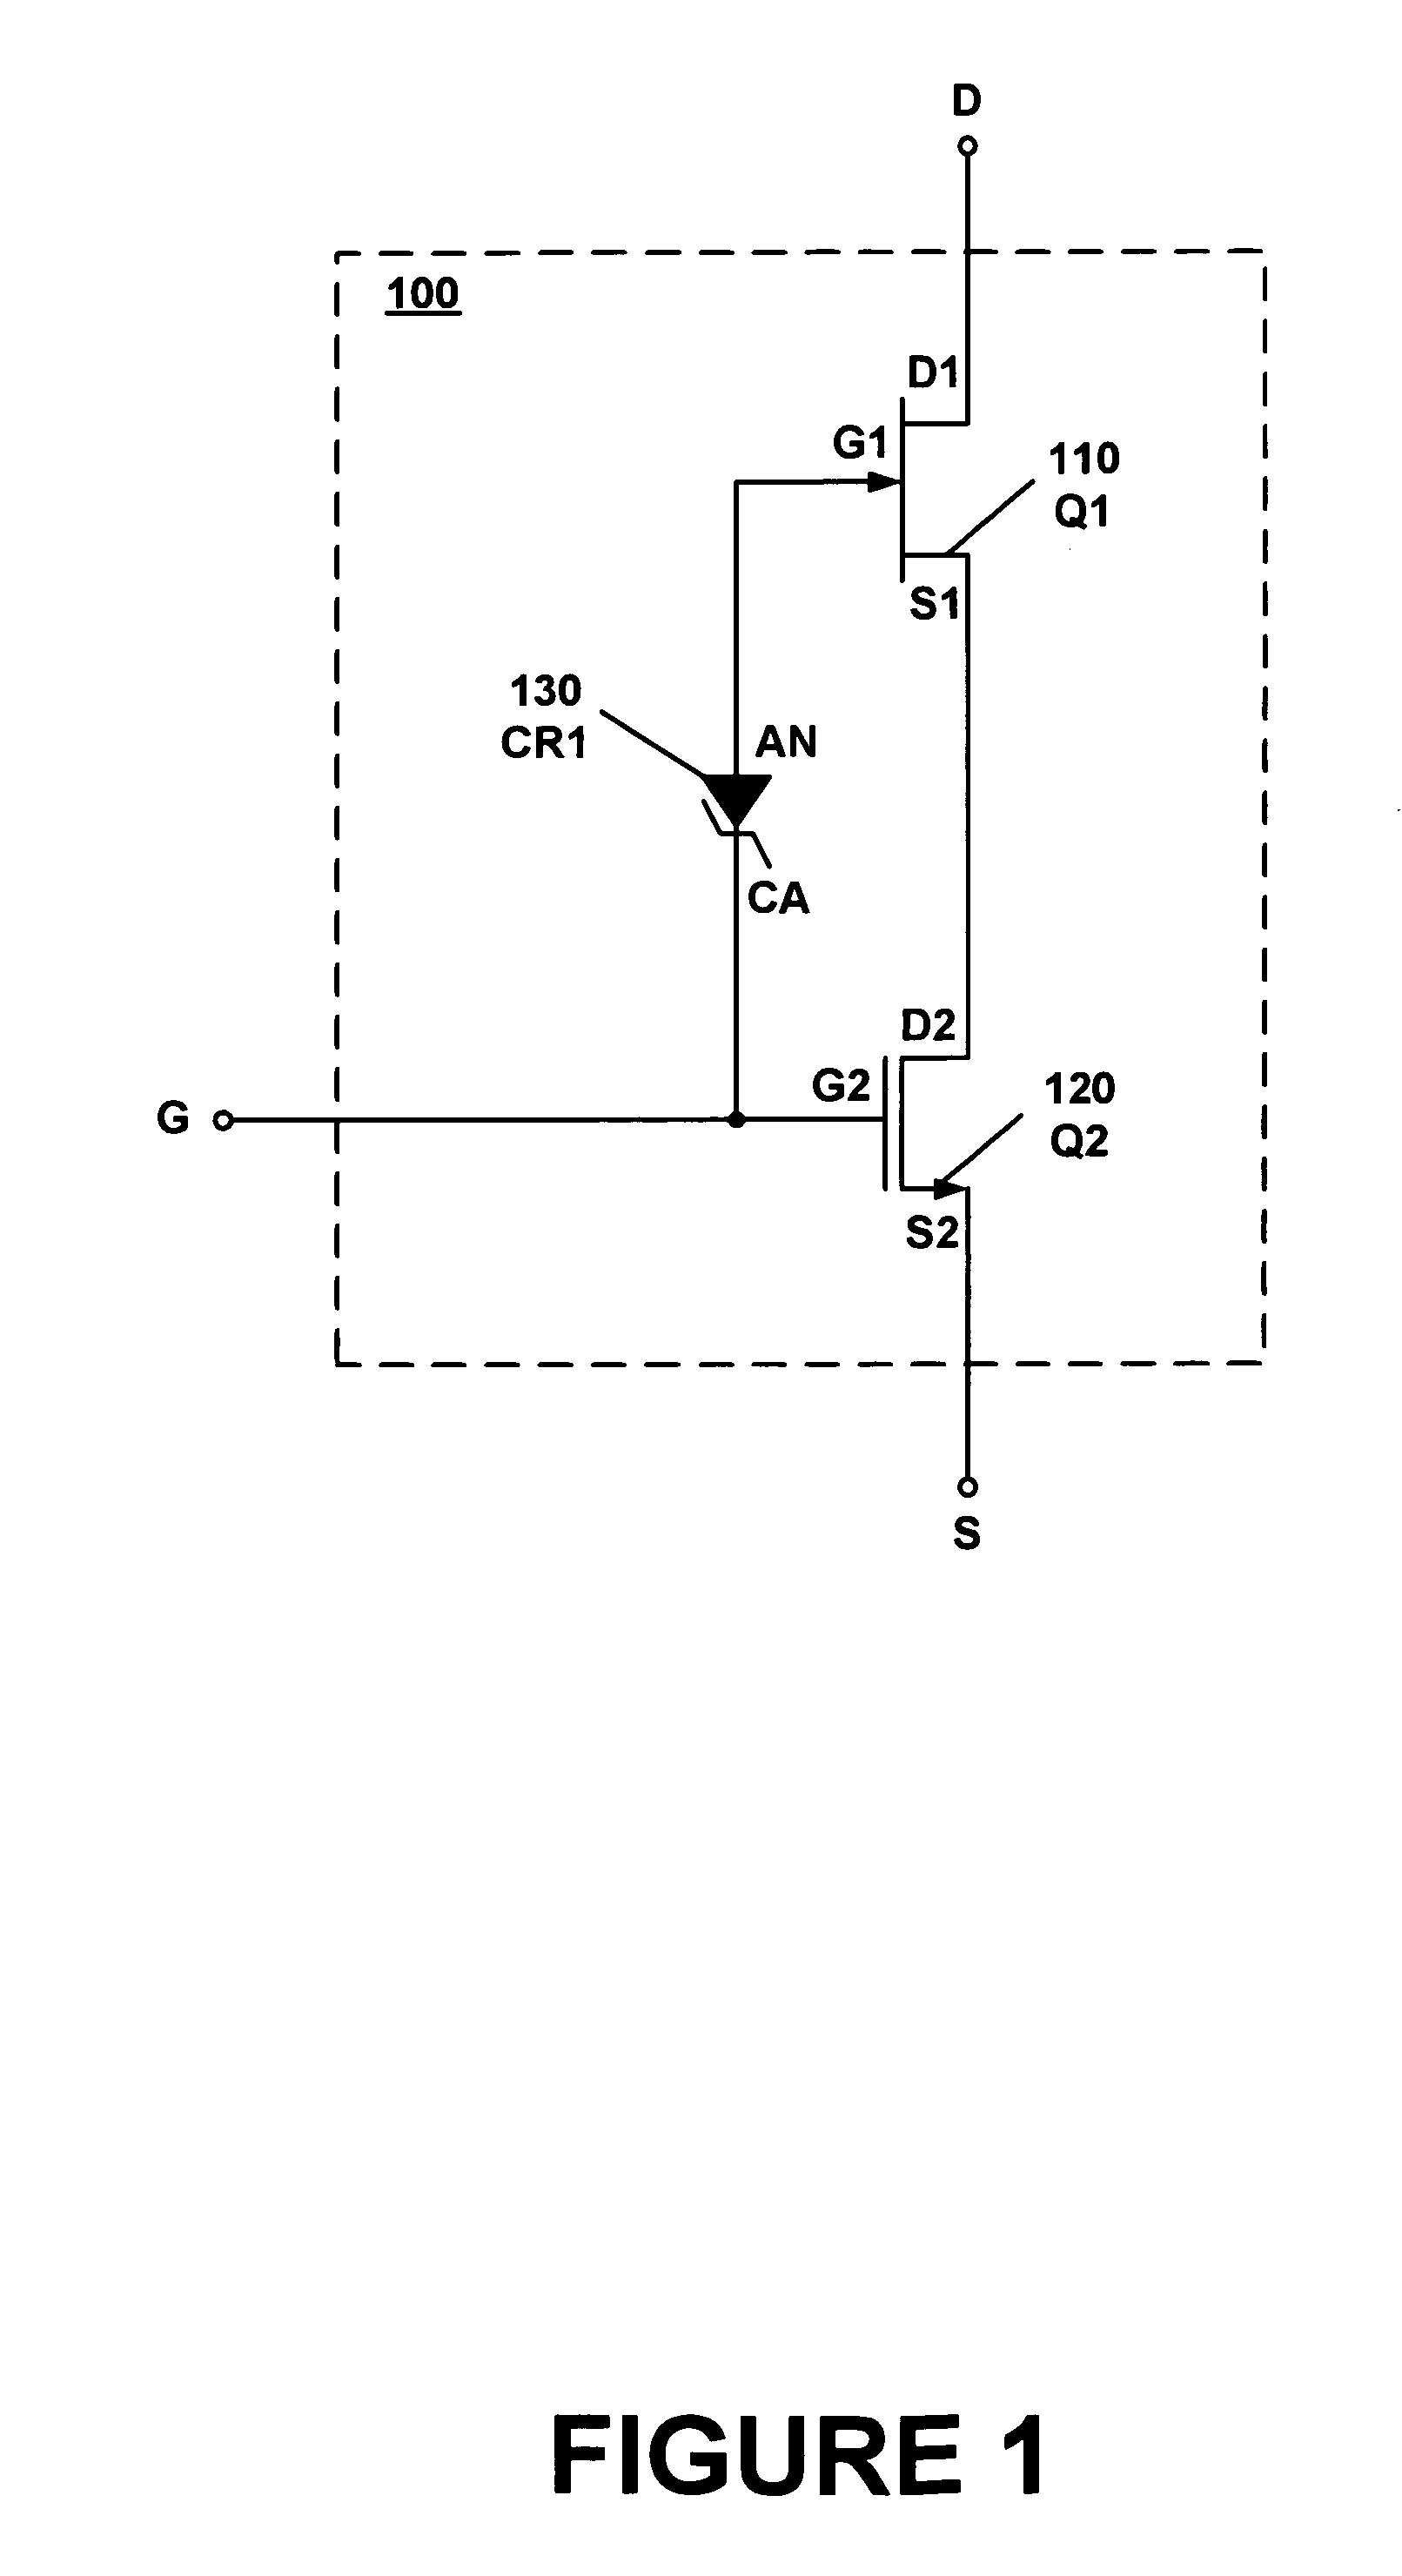 Composite field effect transistor